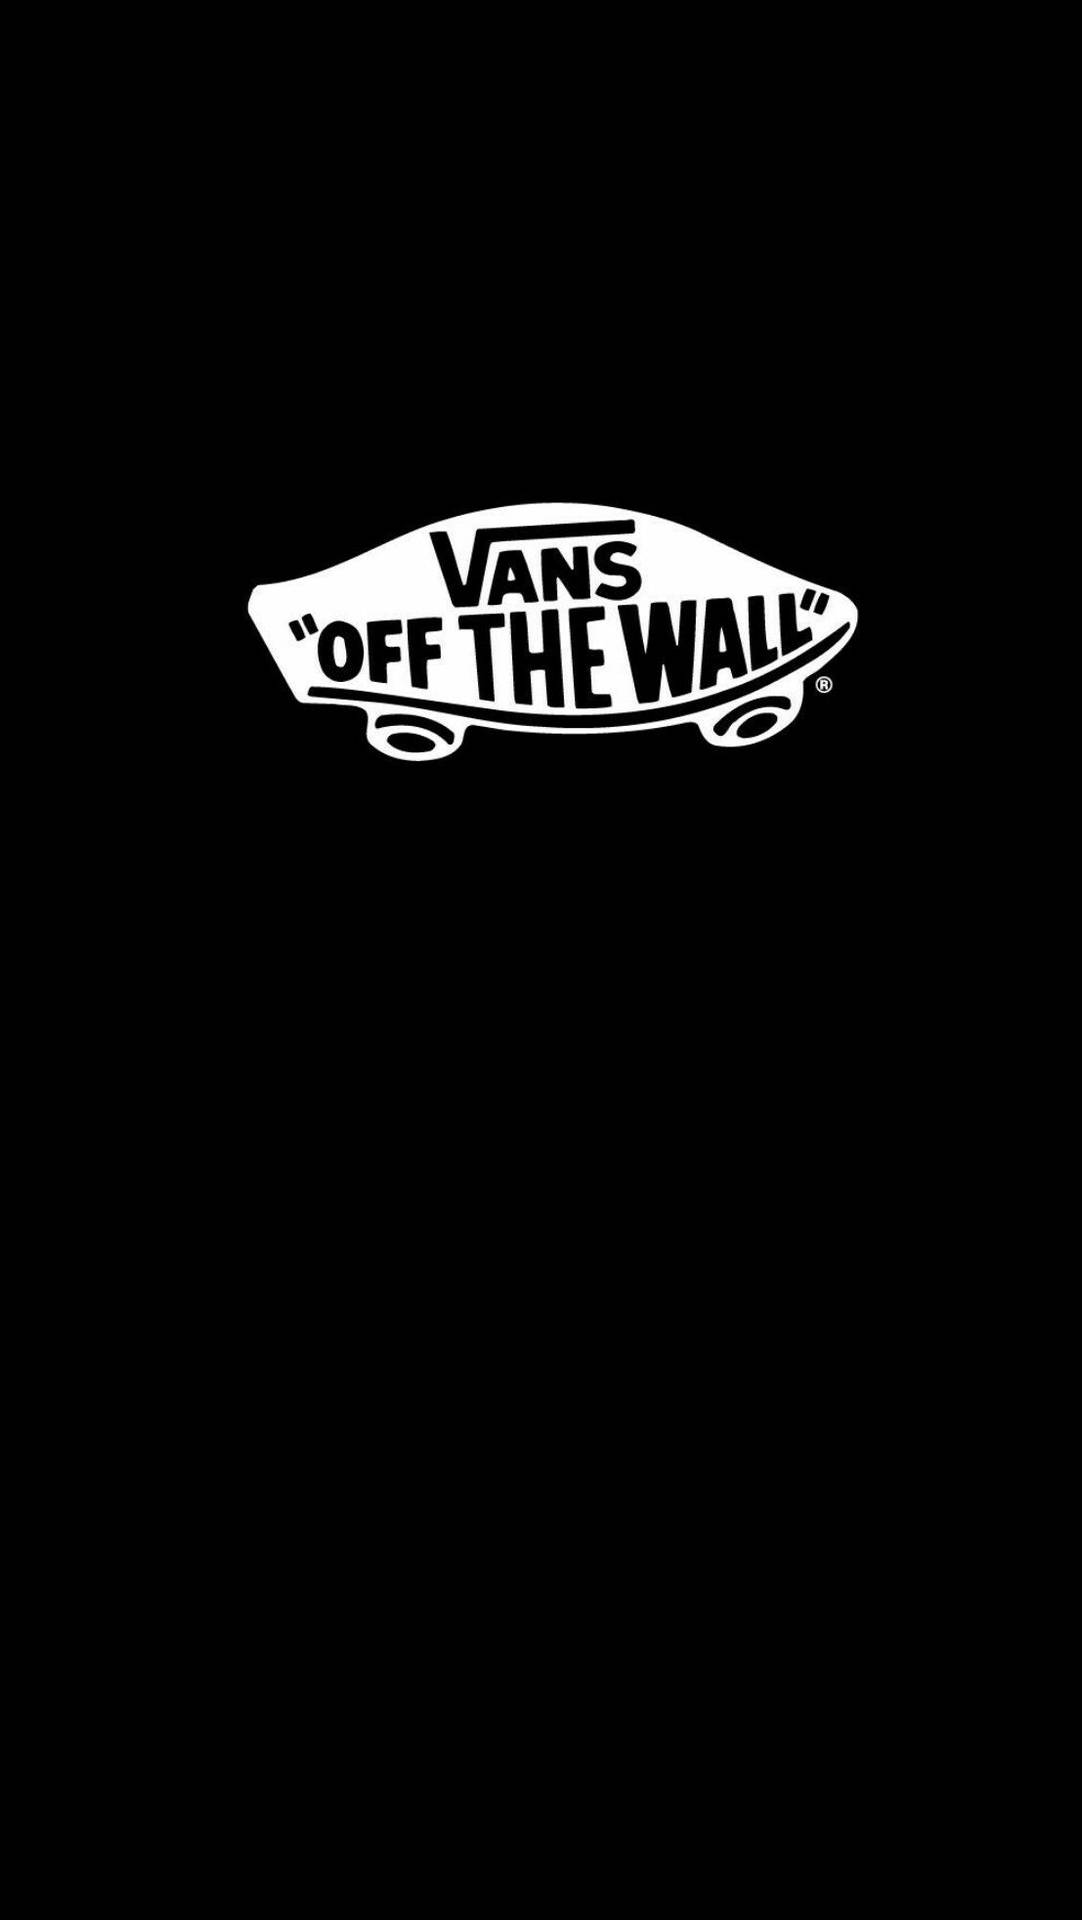 vans off the wall wallpaper hd